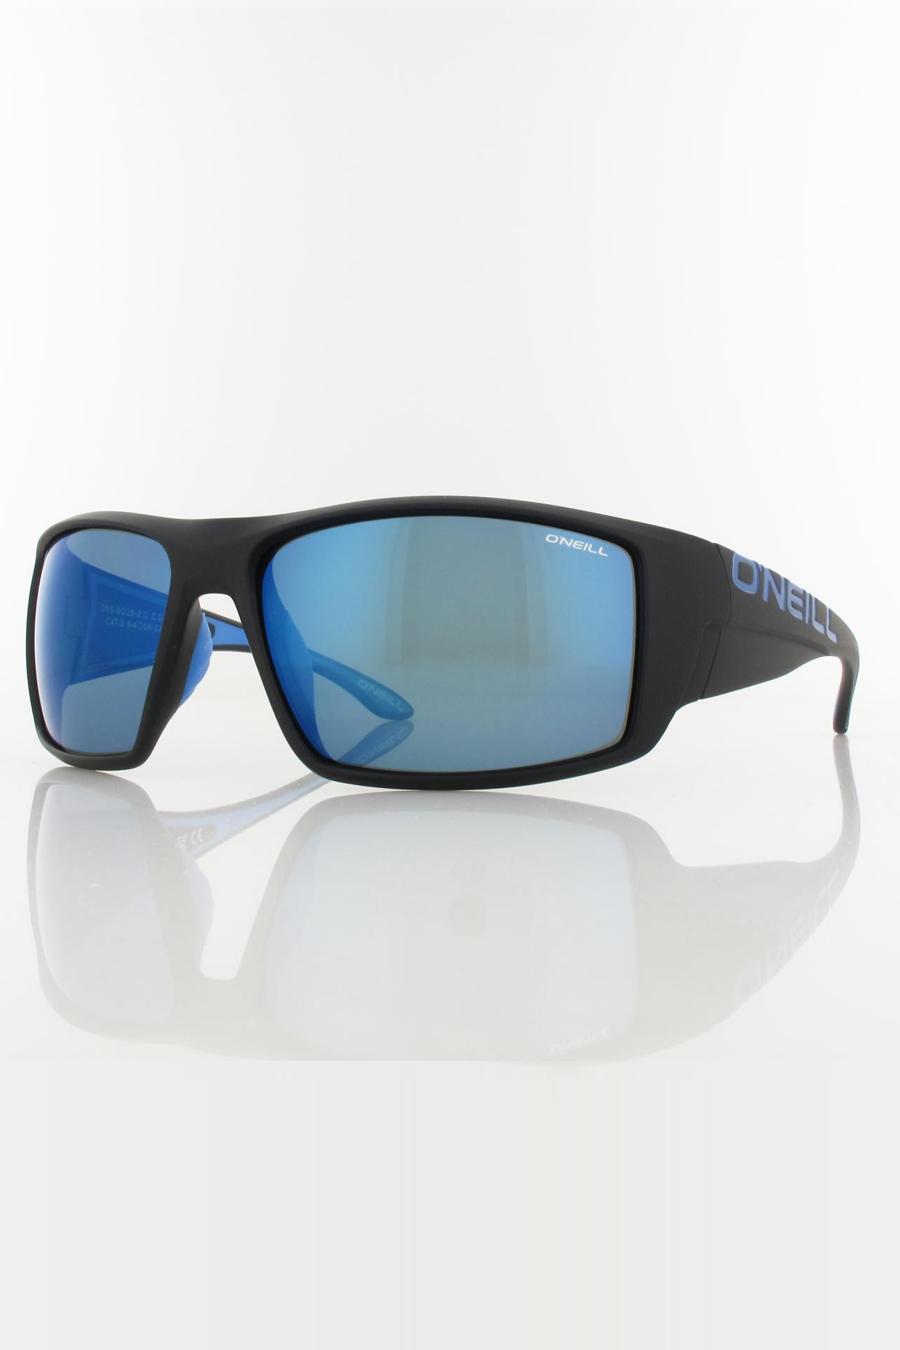 Солнечные очки ONEILL ONS-9019-20-127P